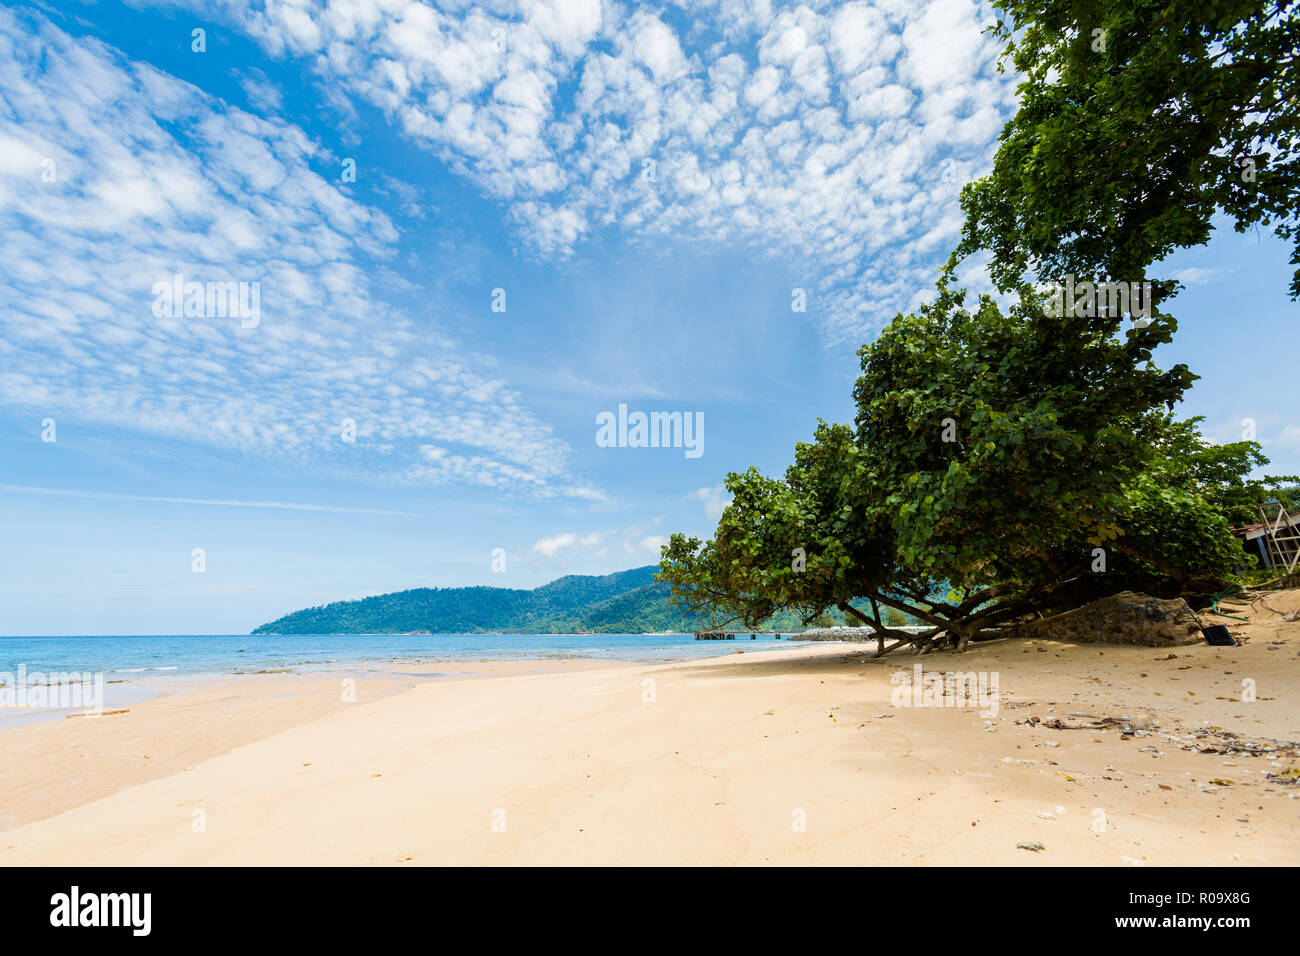 El paisaje tropical de la isla de Tioman en Malasia. Hermoso paisaje del sur de Asia oriental en Tekek playa. Foto de stock